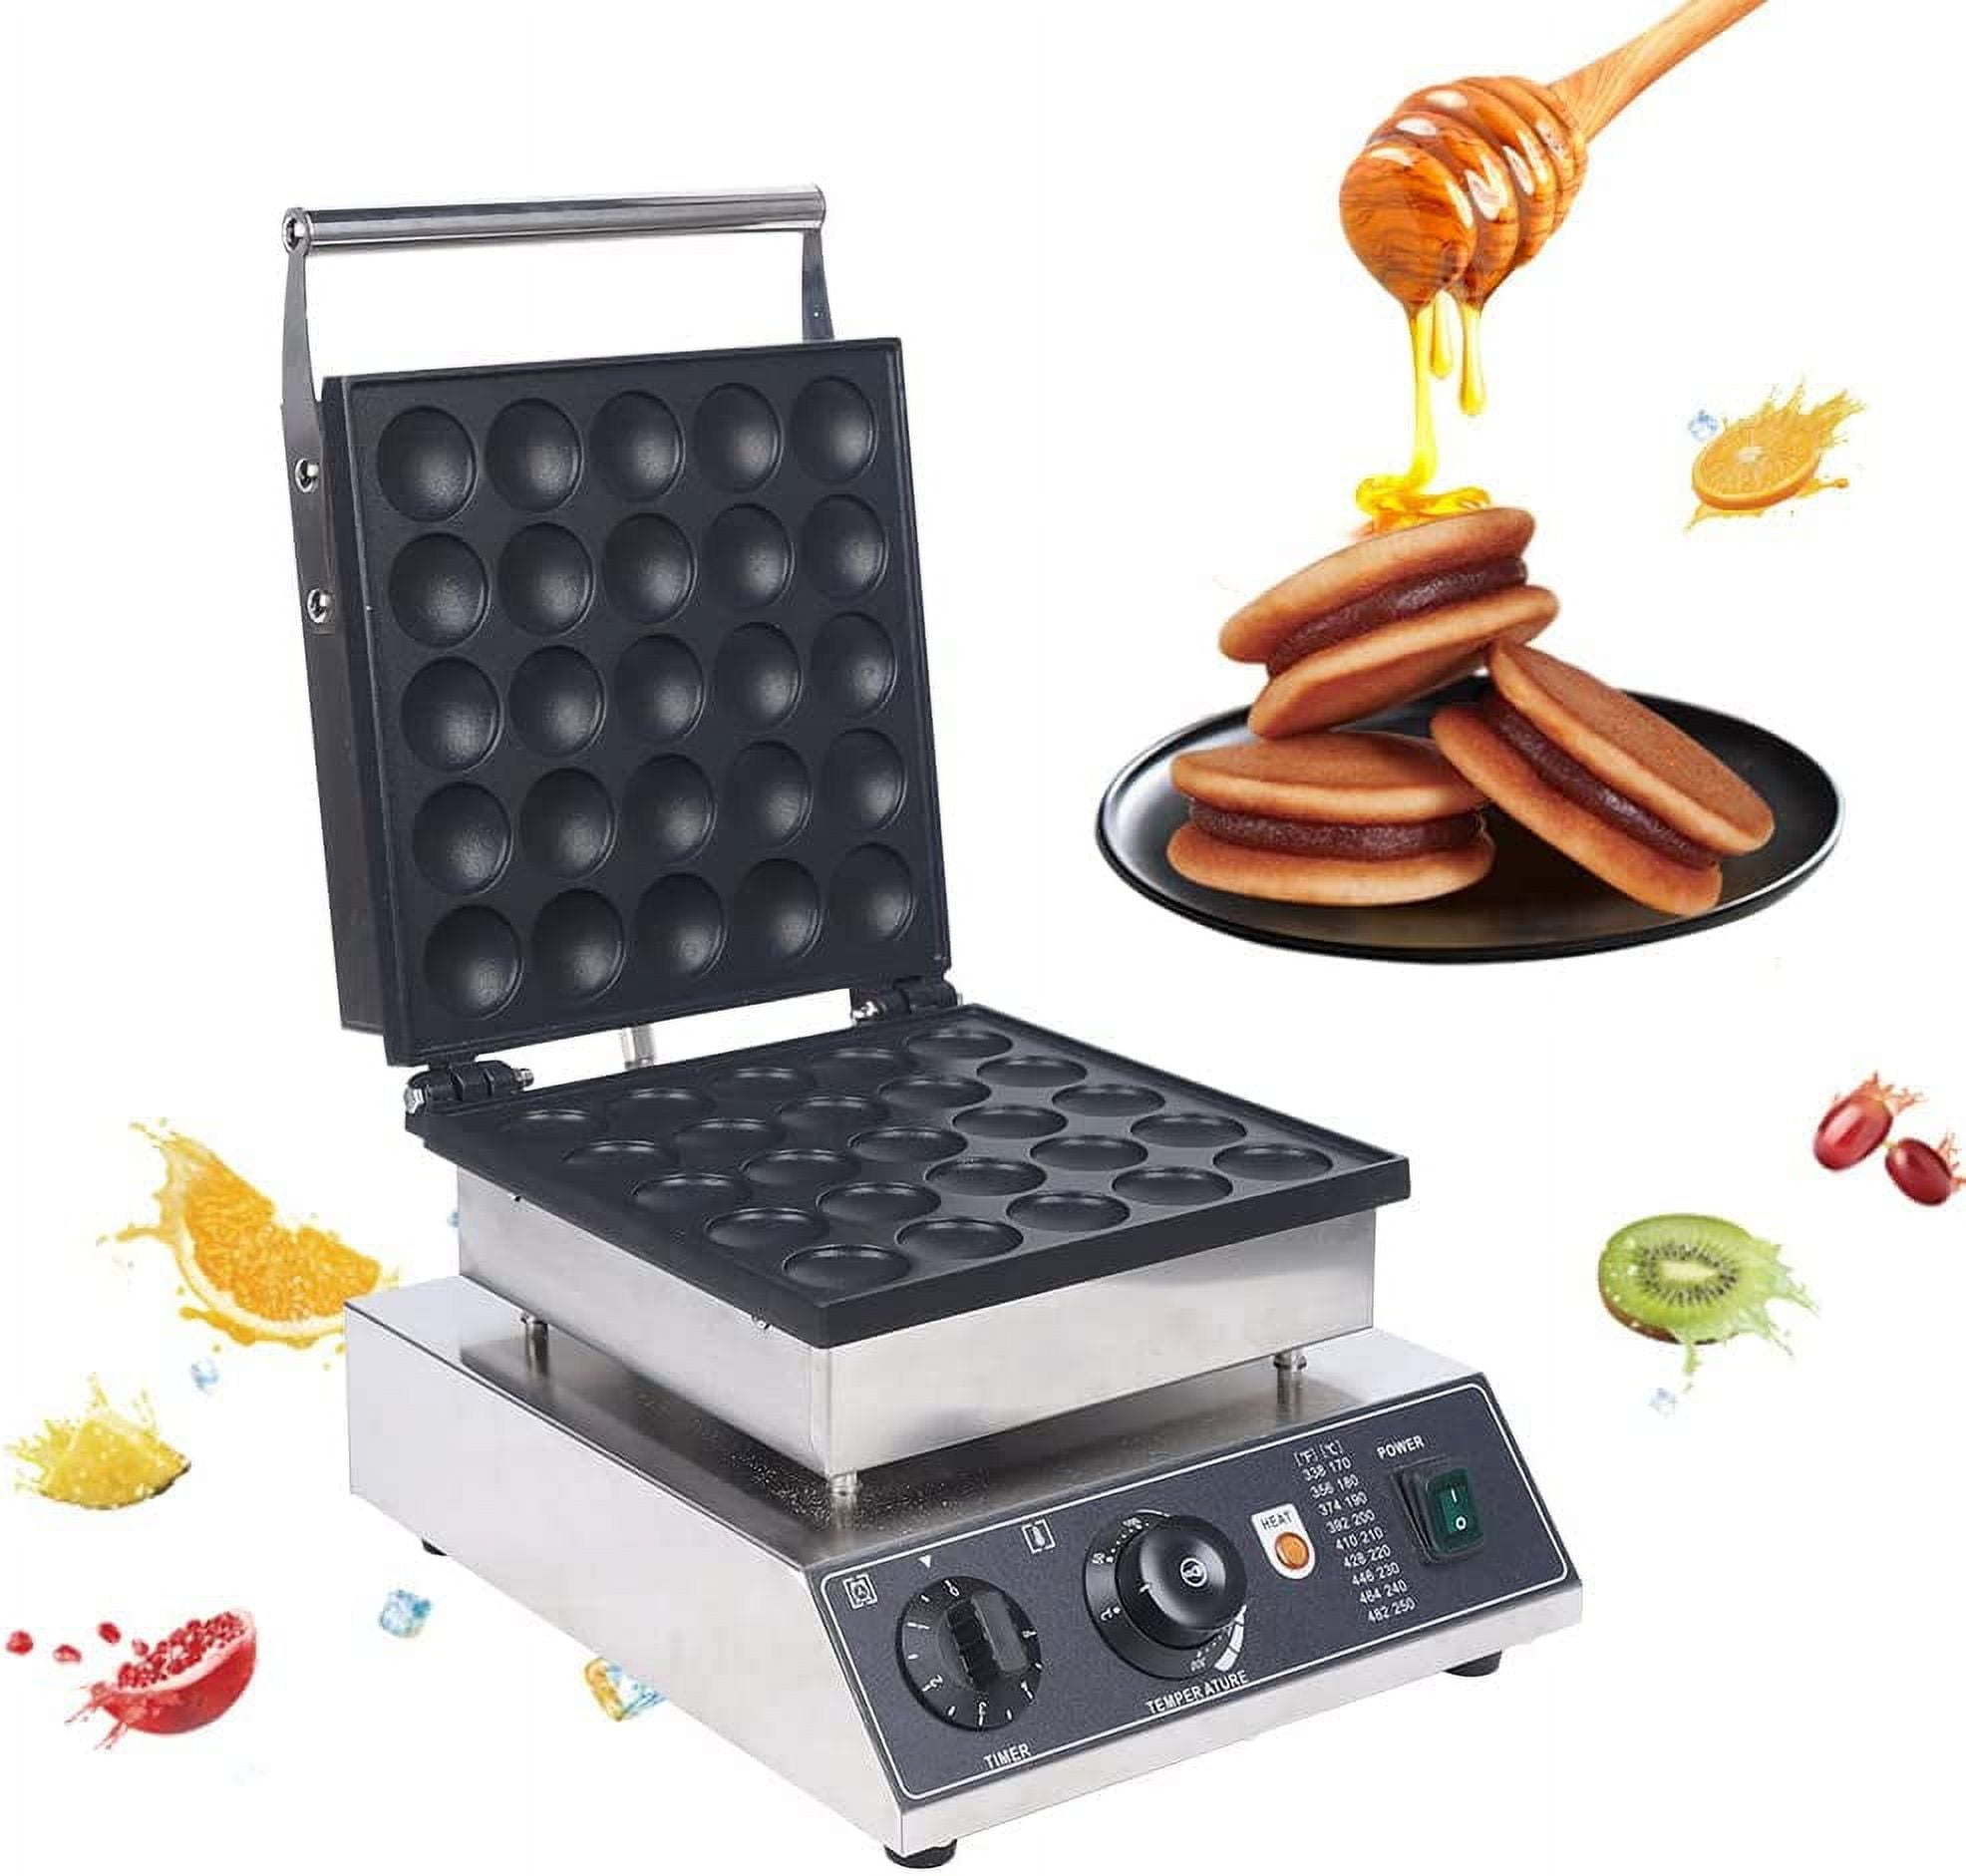  FineMade Mini Pancakes Maker Machine with Non Stick